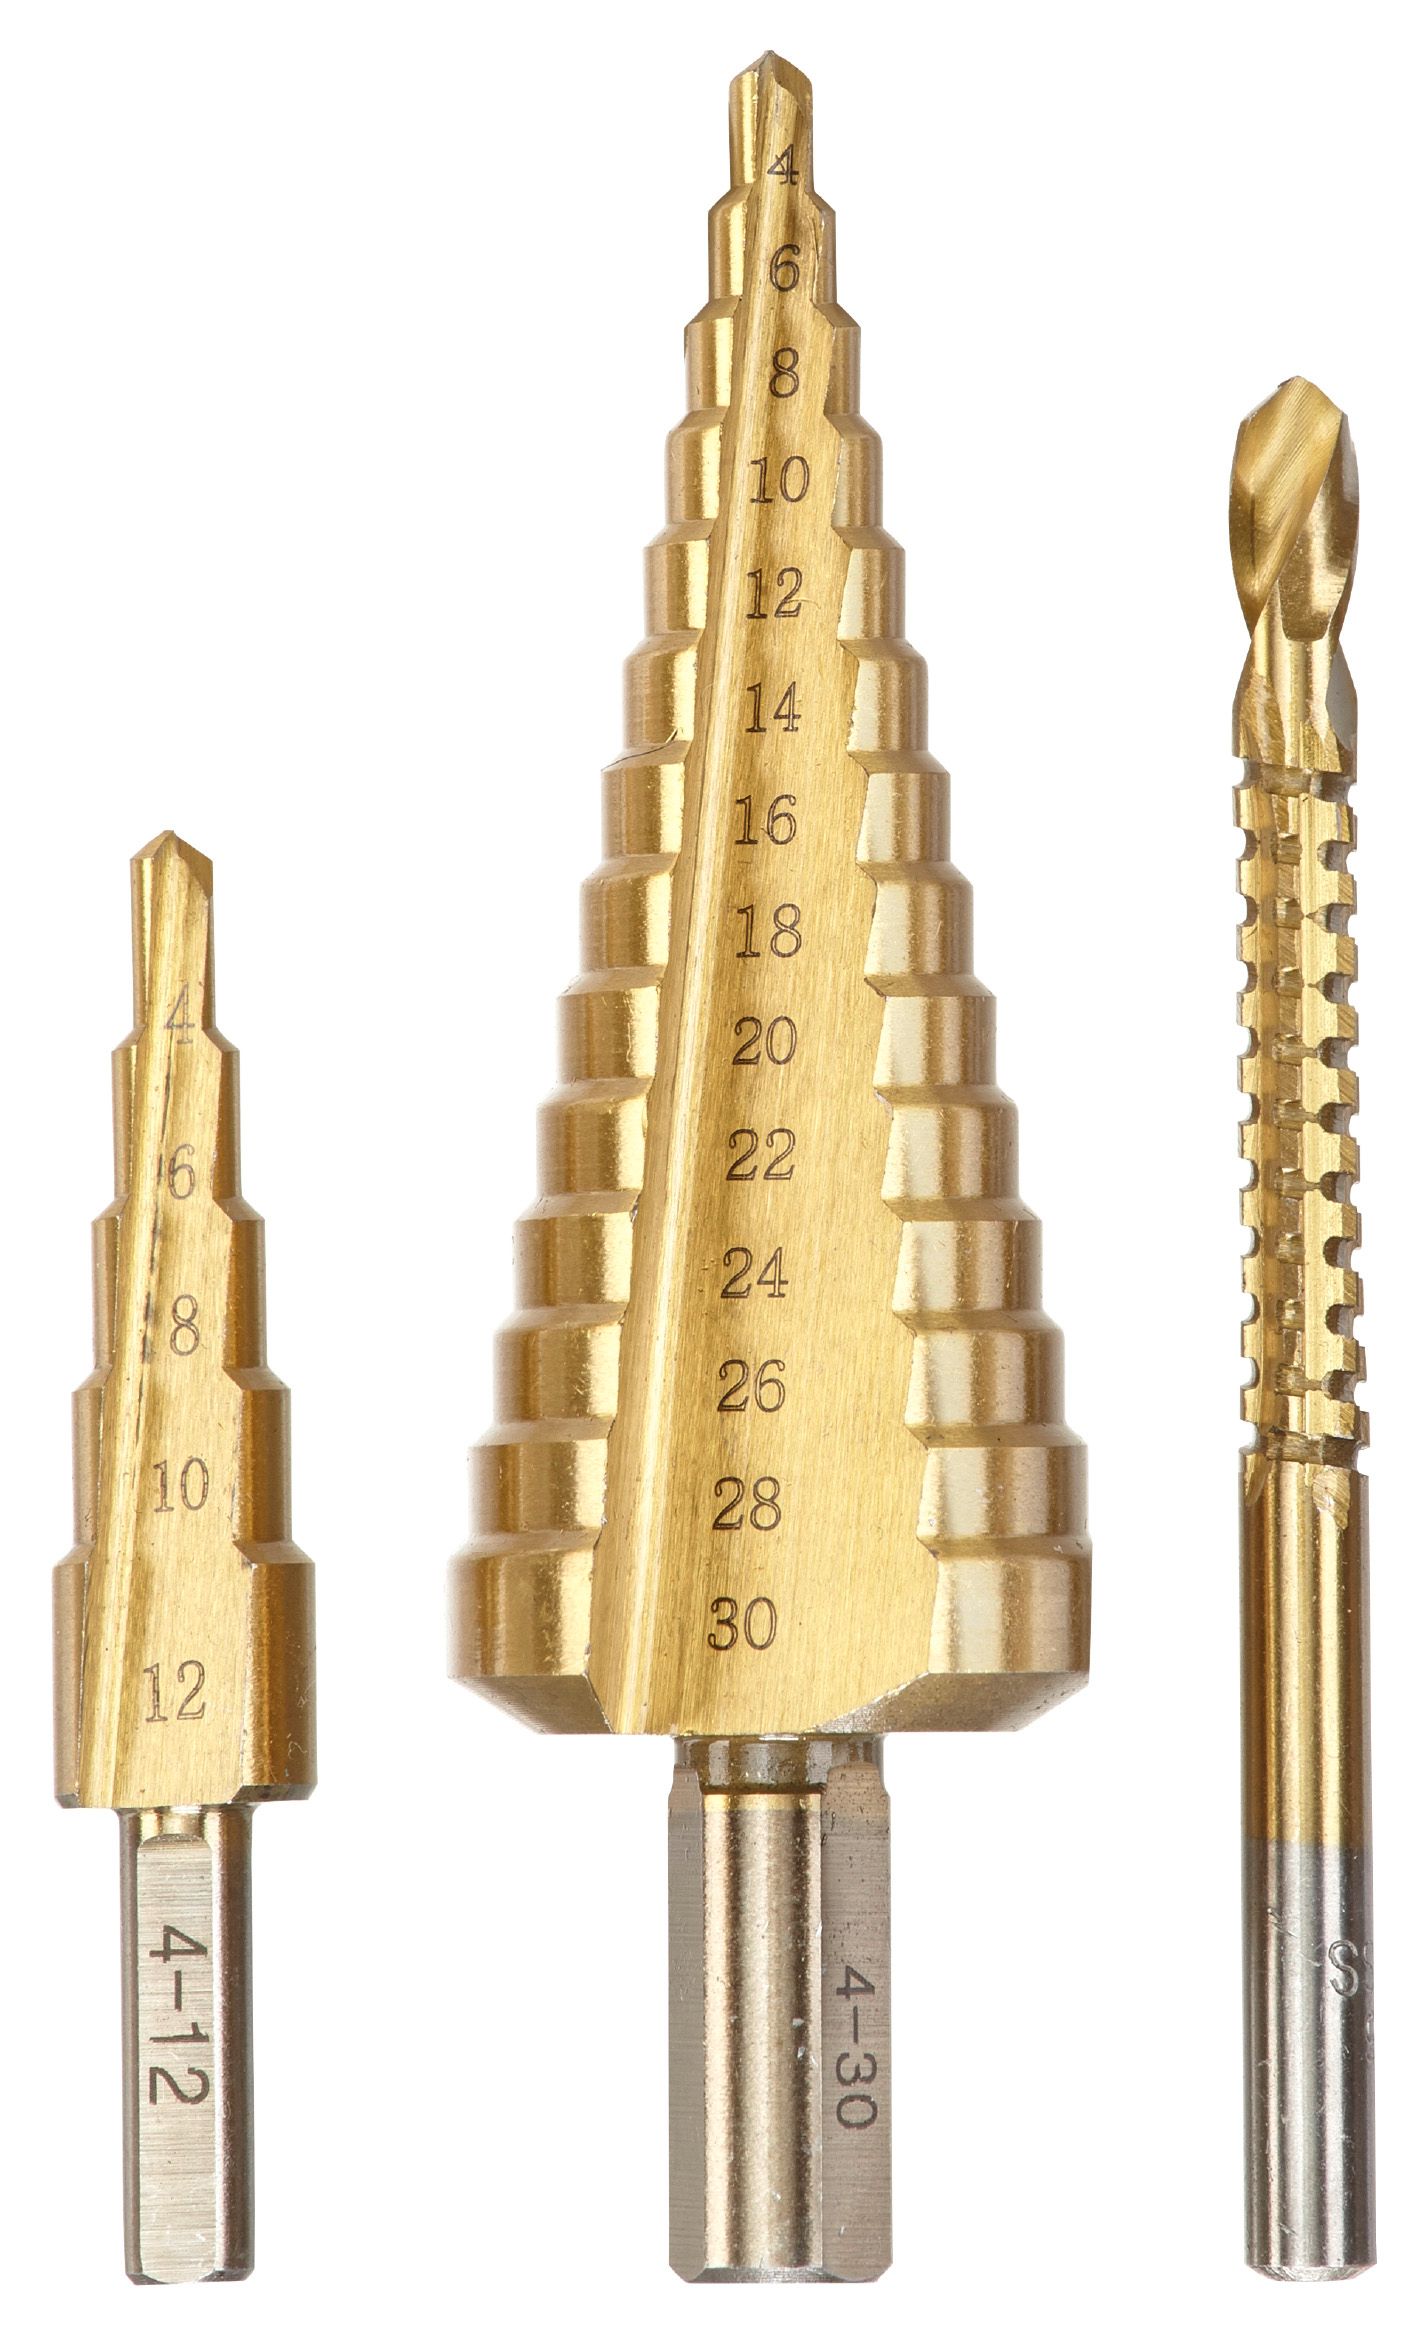 Einhell kwb 3 Piece Step Drill Bit Set 4-12mm - 4-30mm & Rotary File